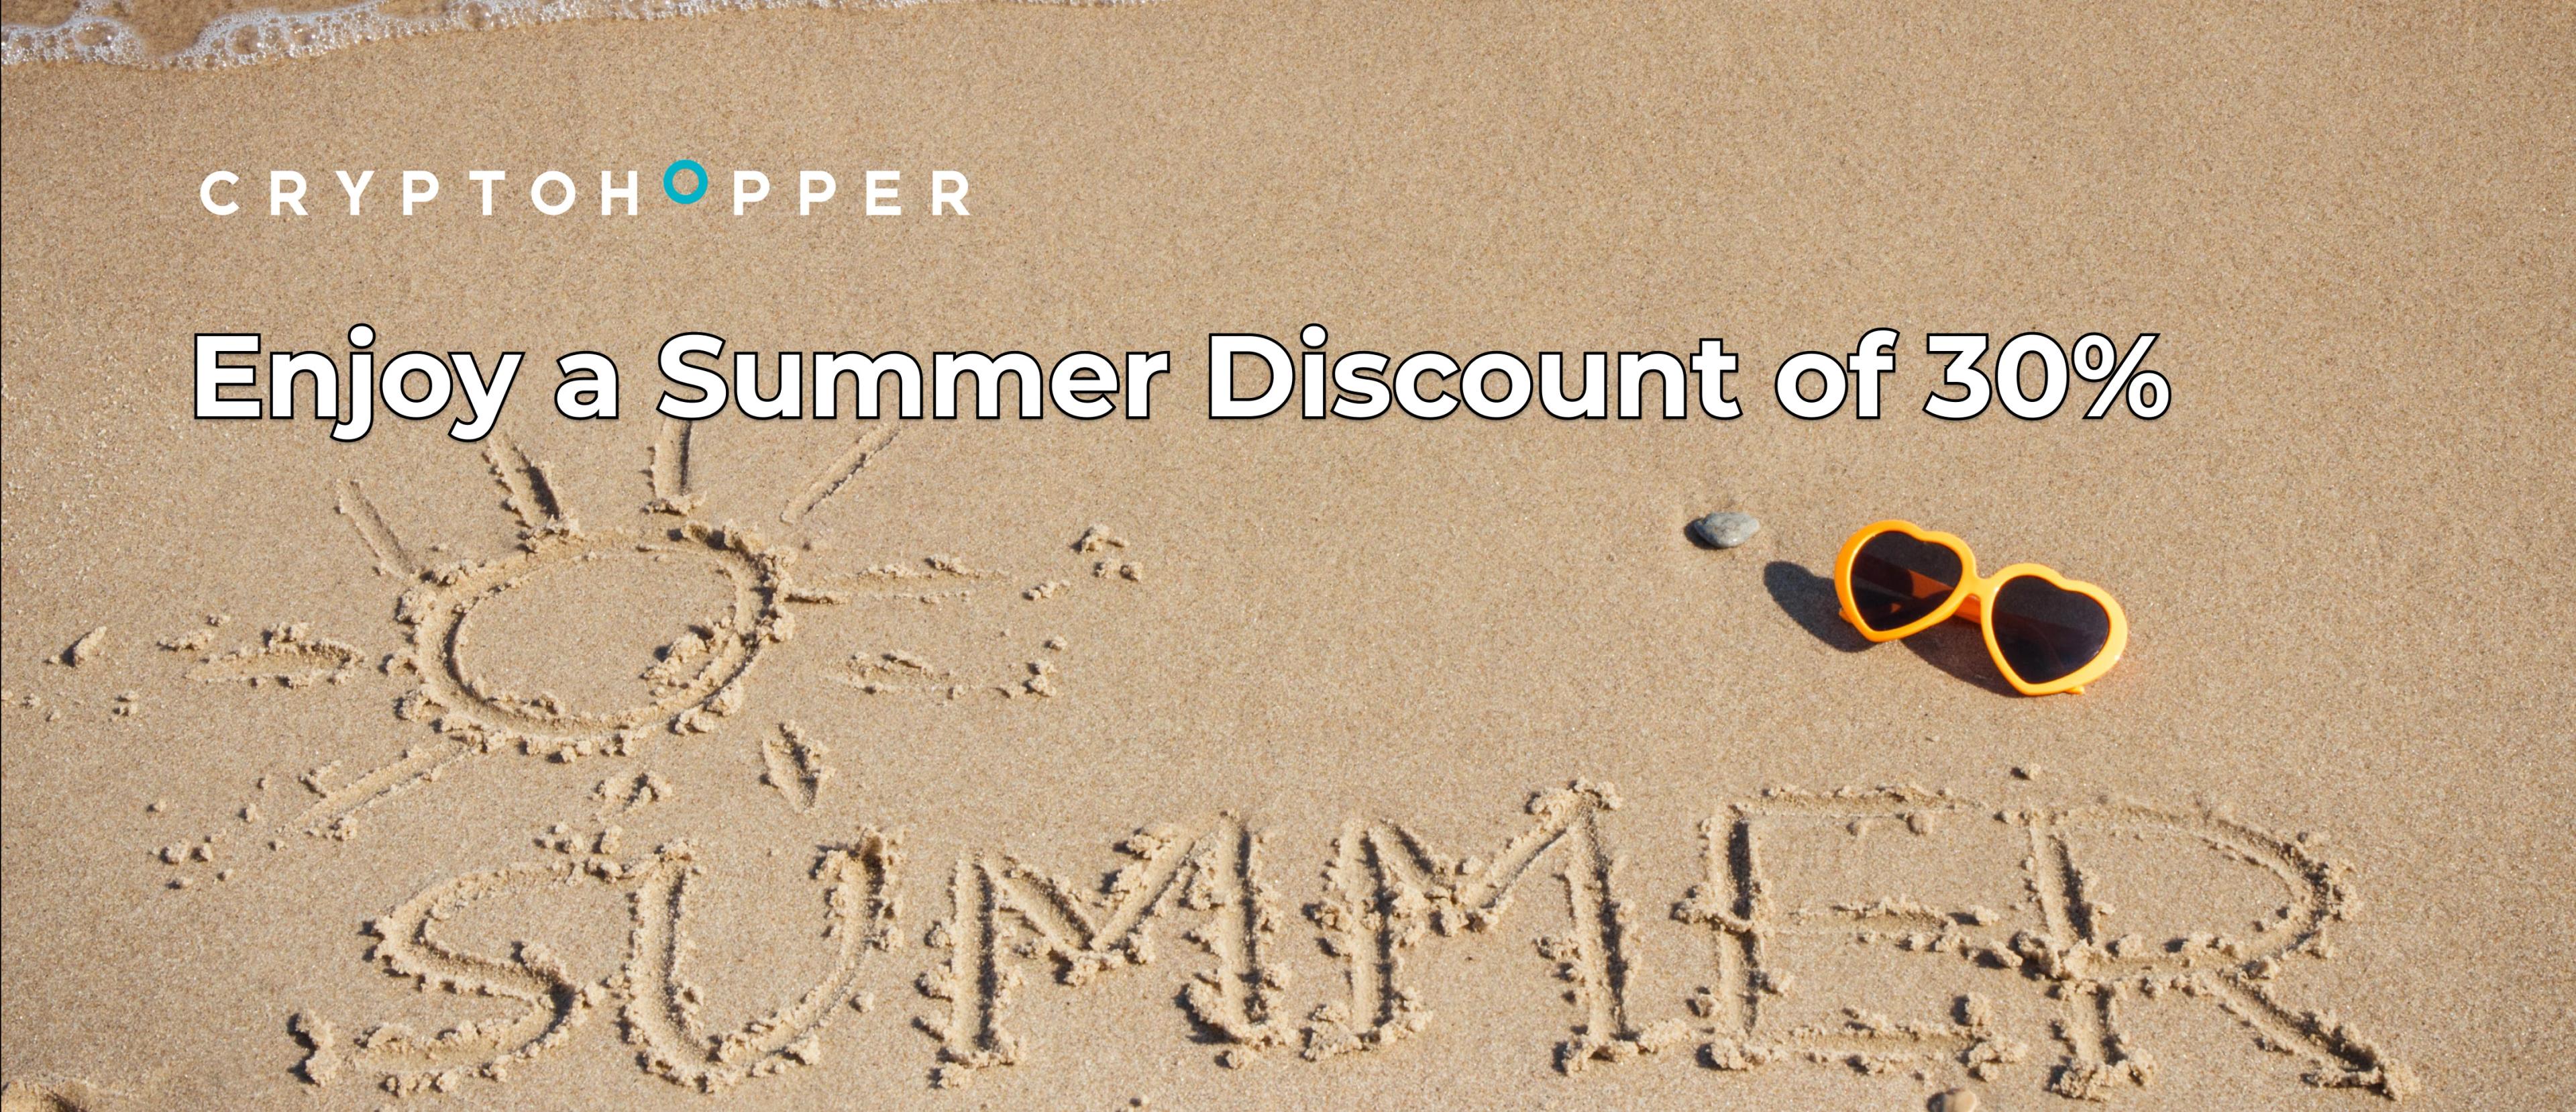 Enjoy a Summer Discount of 30% on Cryptohopper!